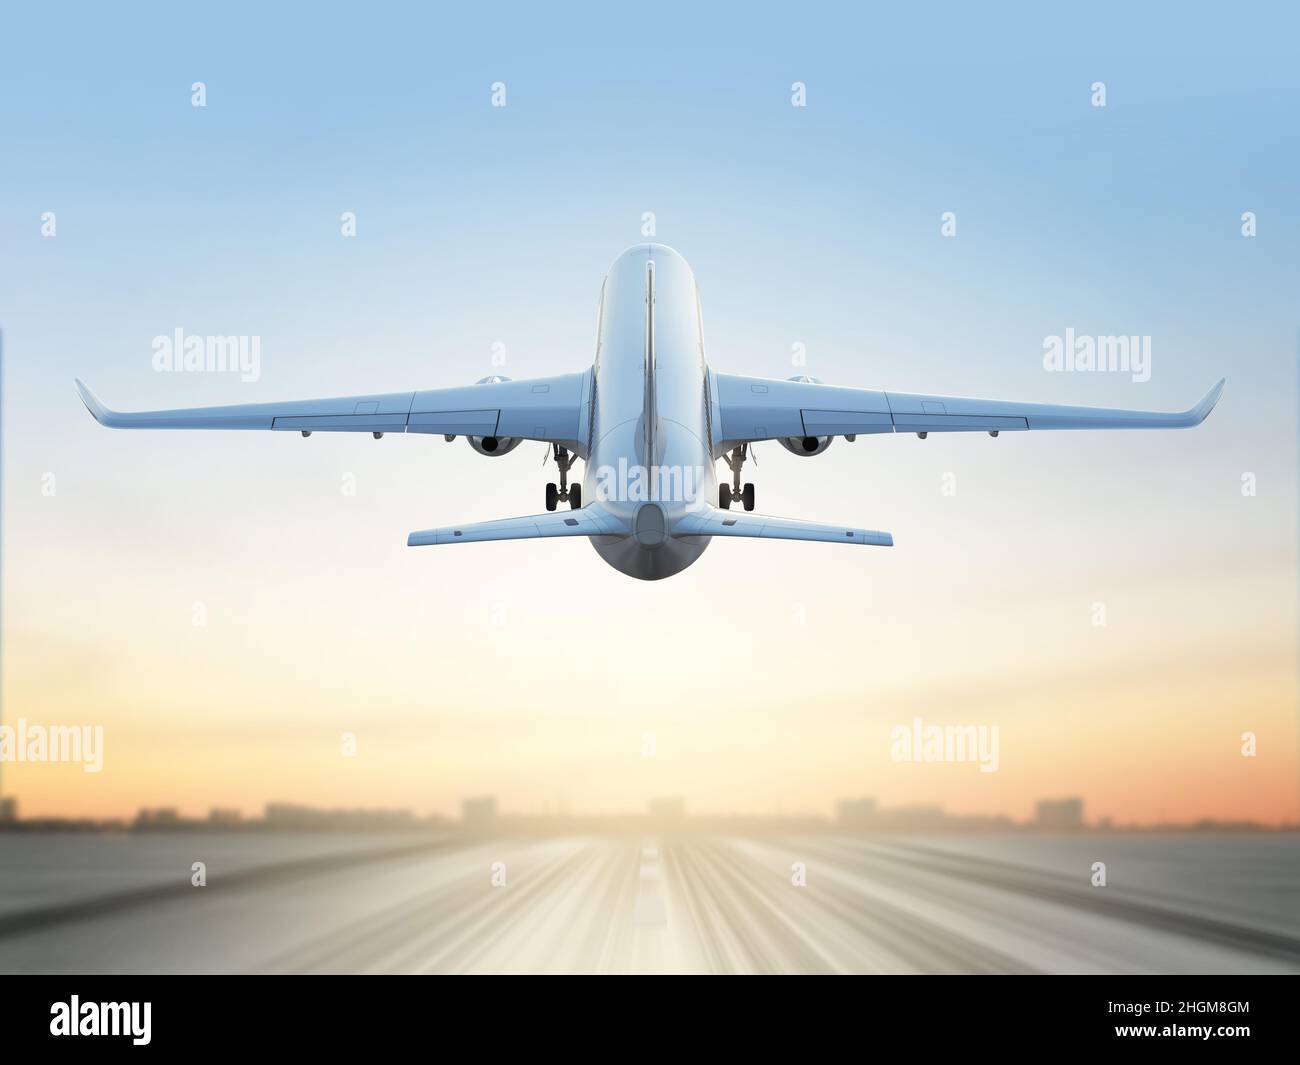 Aeroplane taking off a runway, illustration Stock Photo